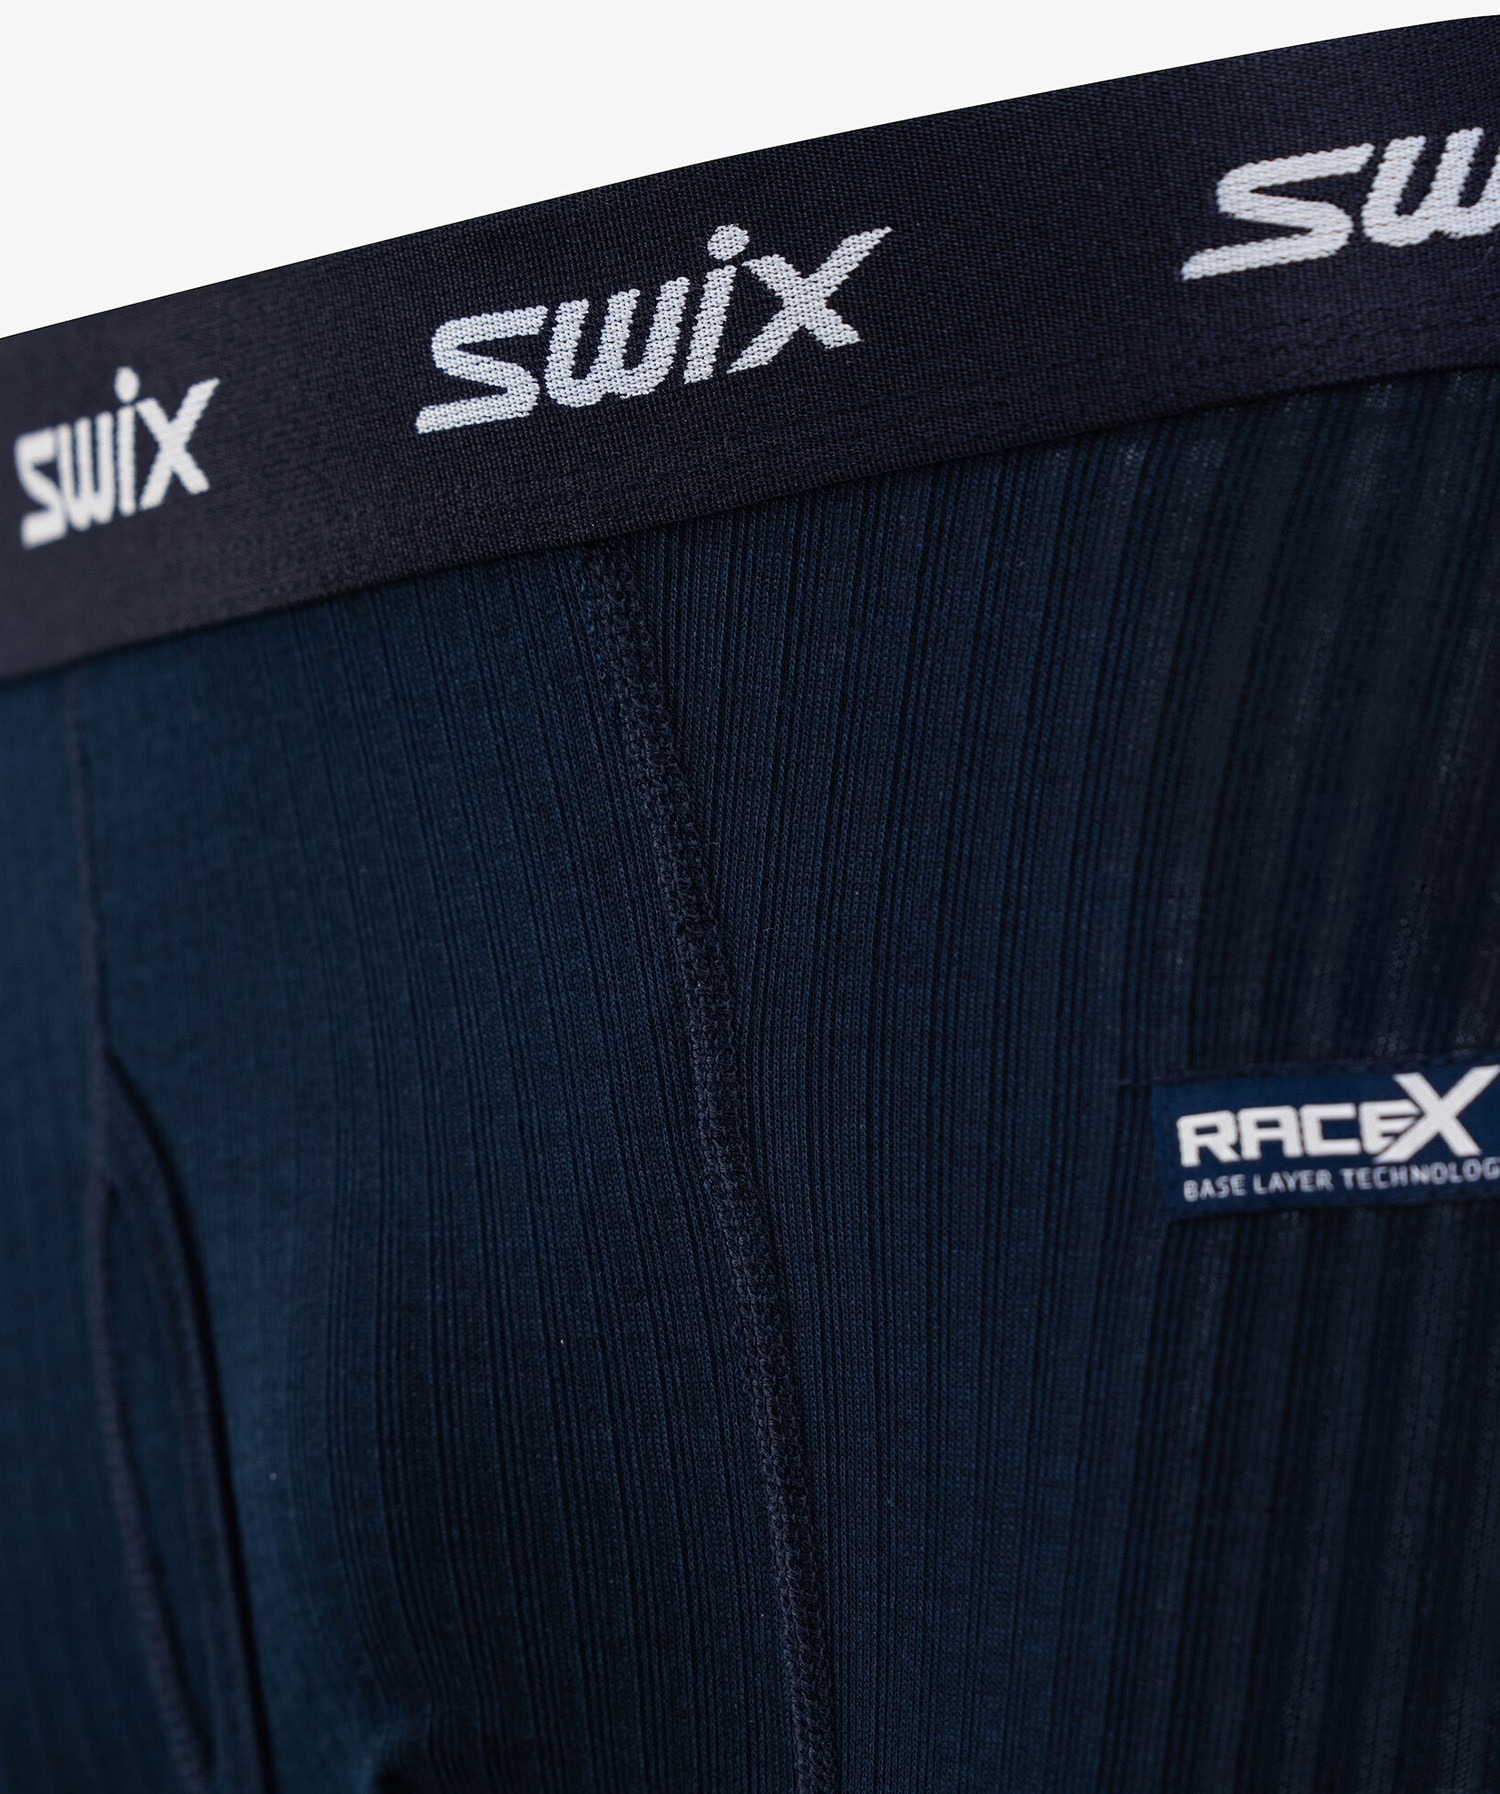 Swix RaceX bukse